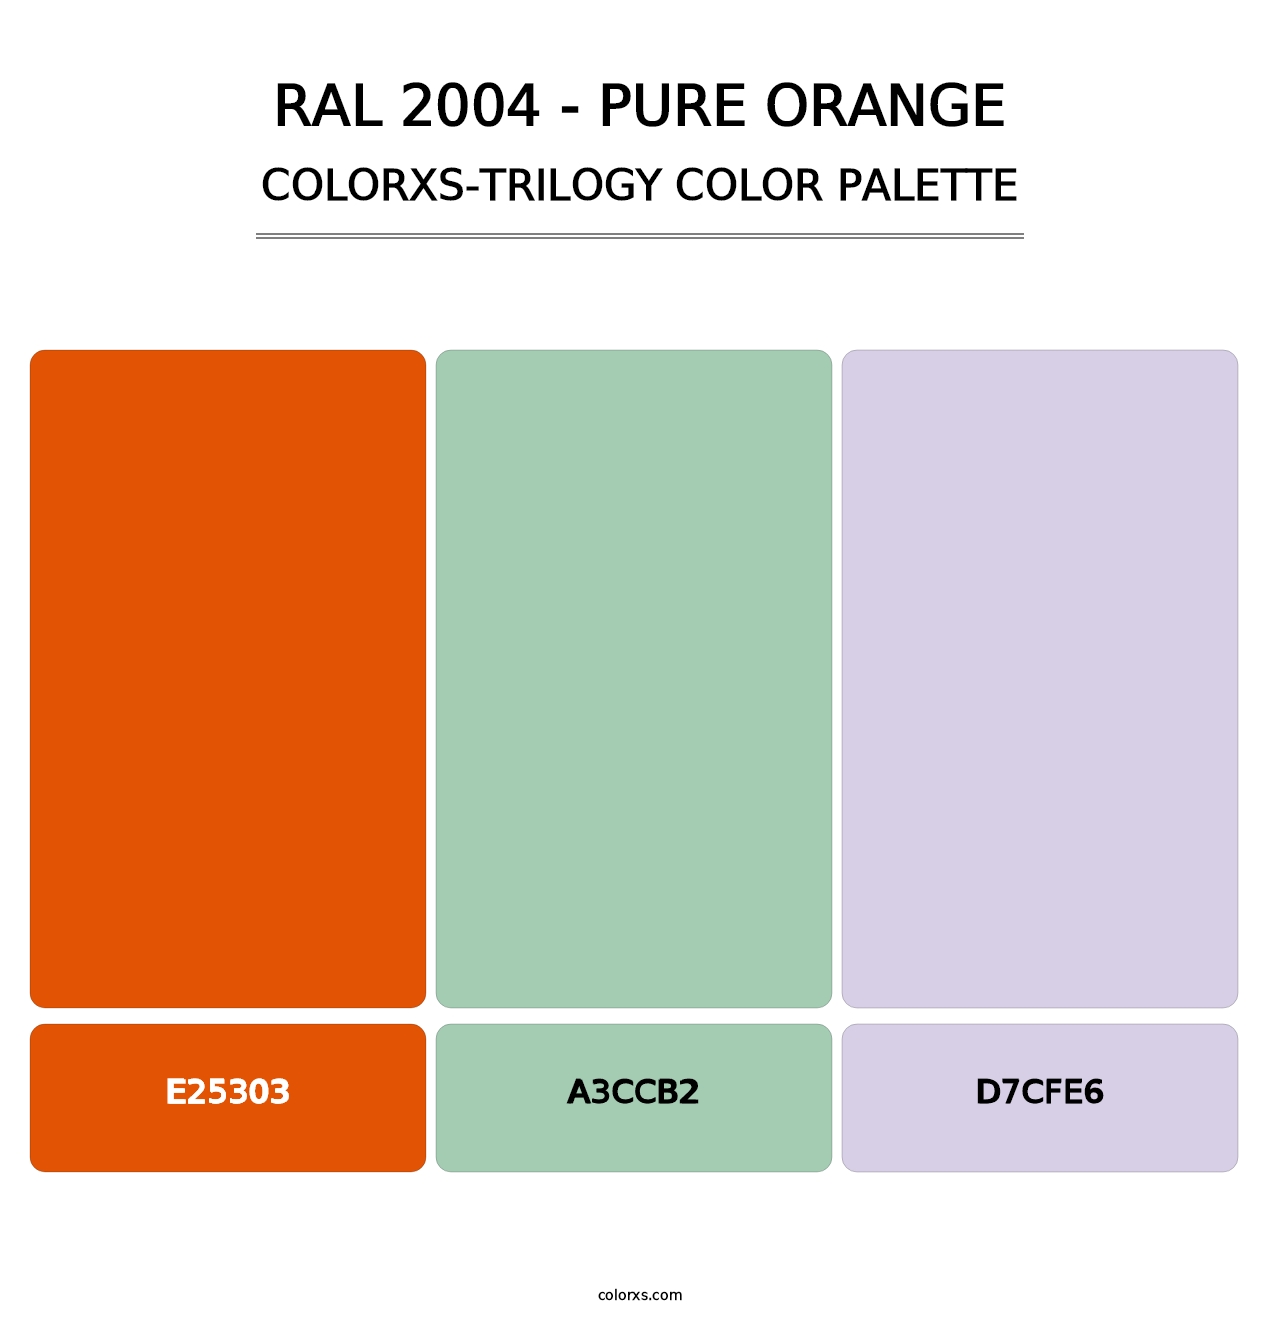 RAL 2004 - Pure Orange - Colorxs Trilogy Palette